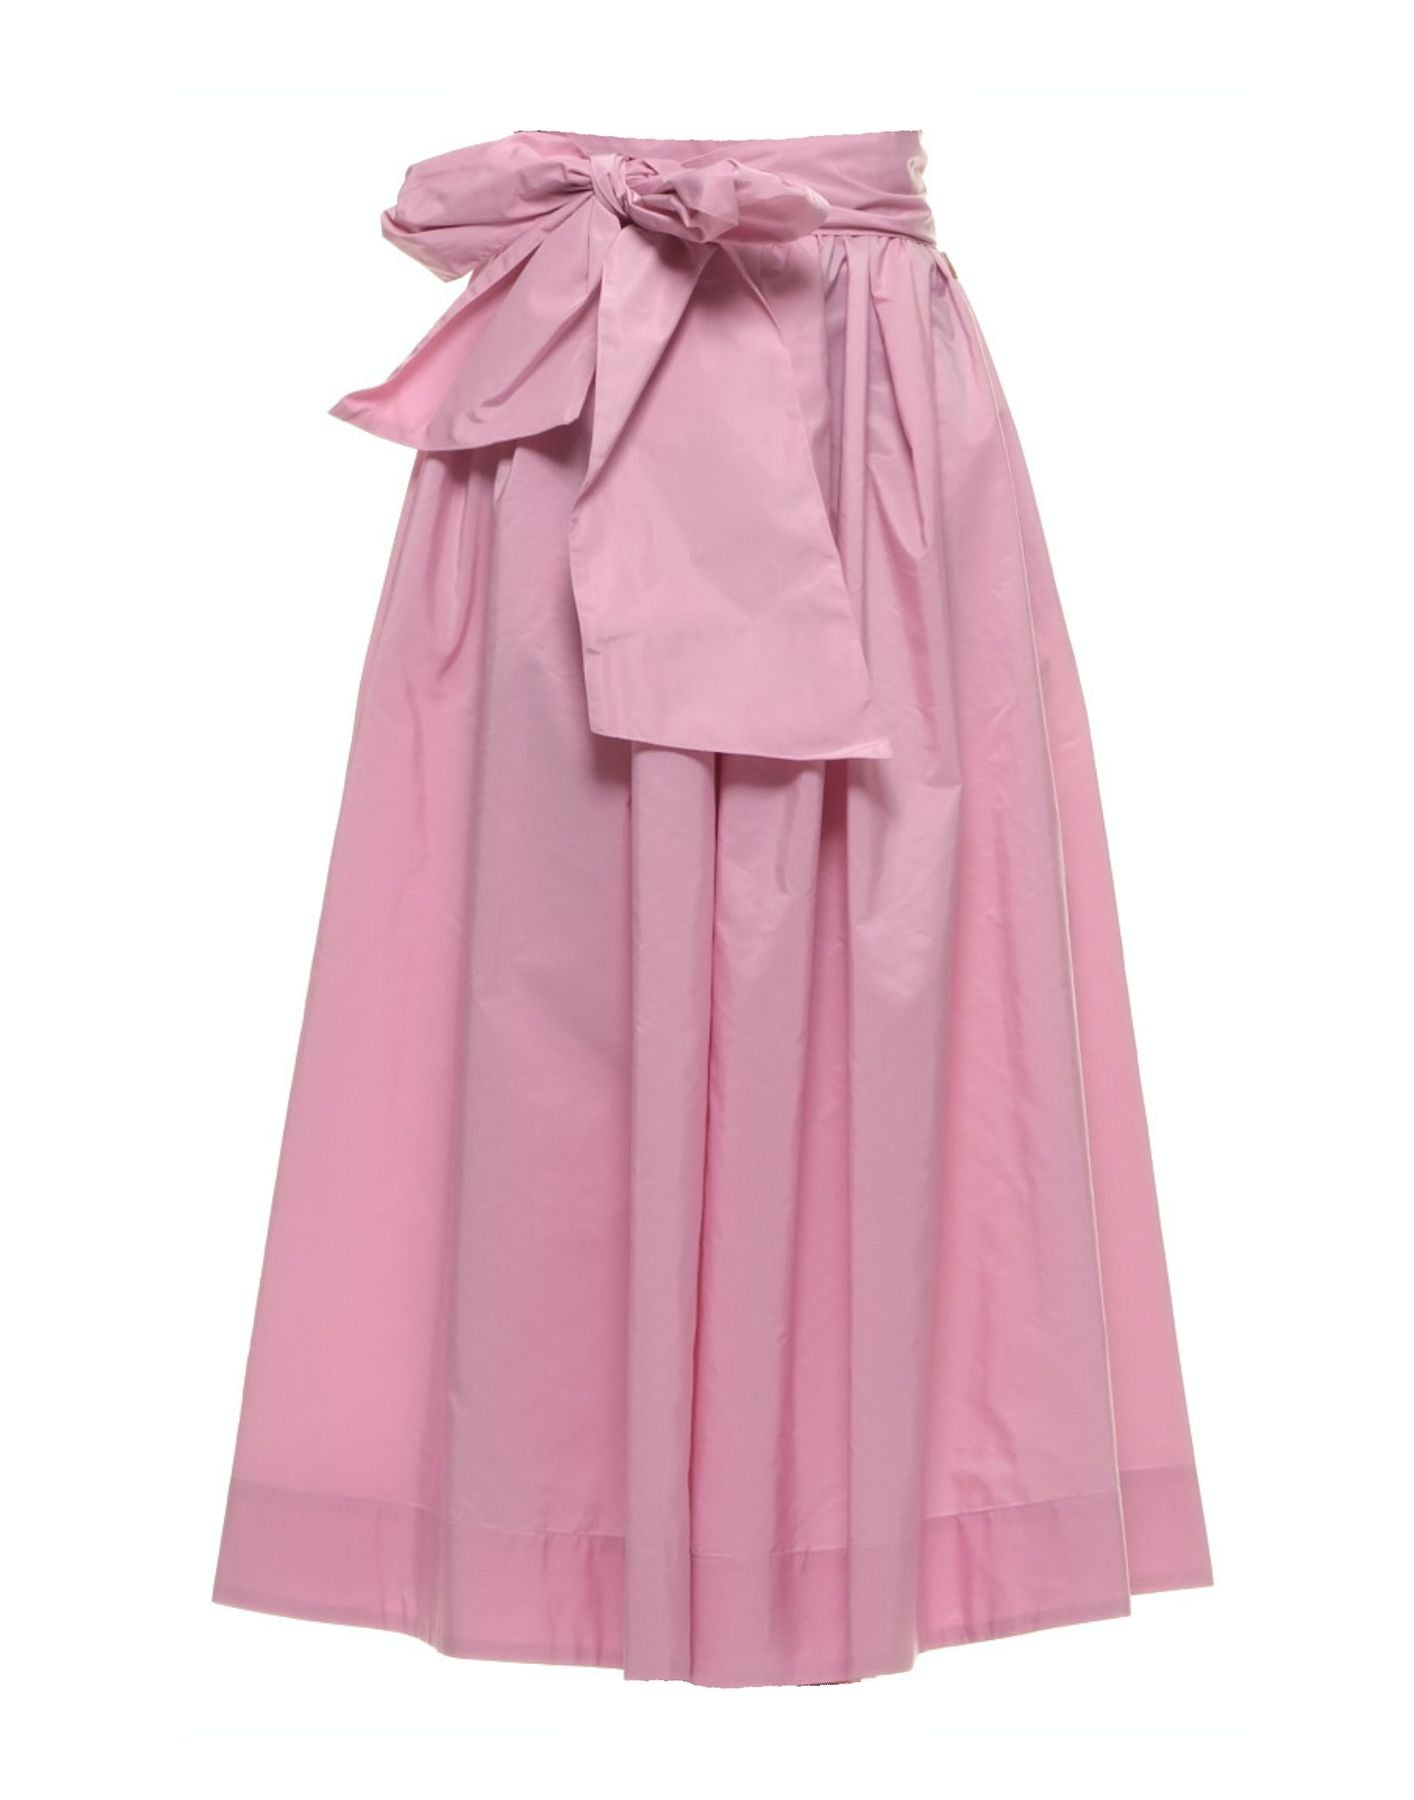 Skirt for woman GOKD05146 ROSA Akep